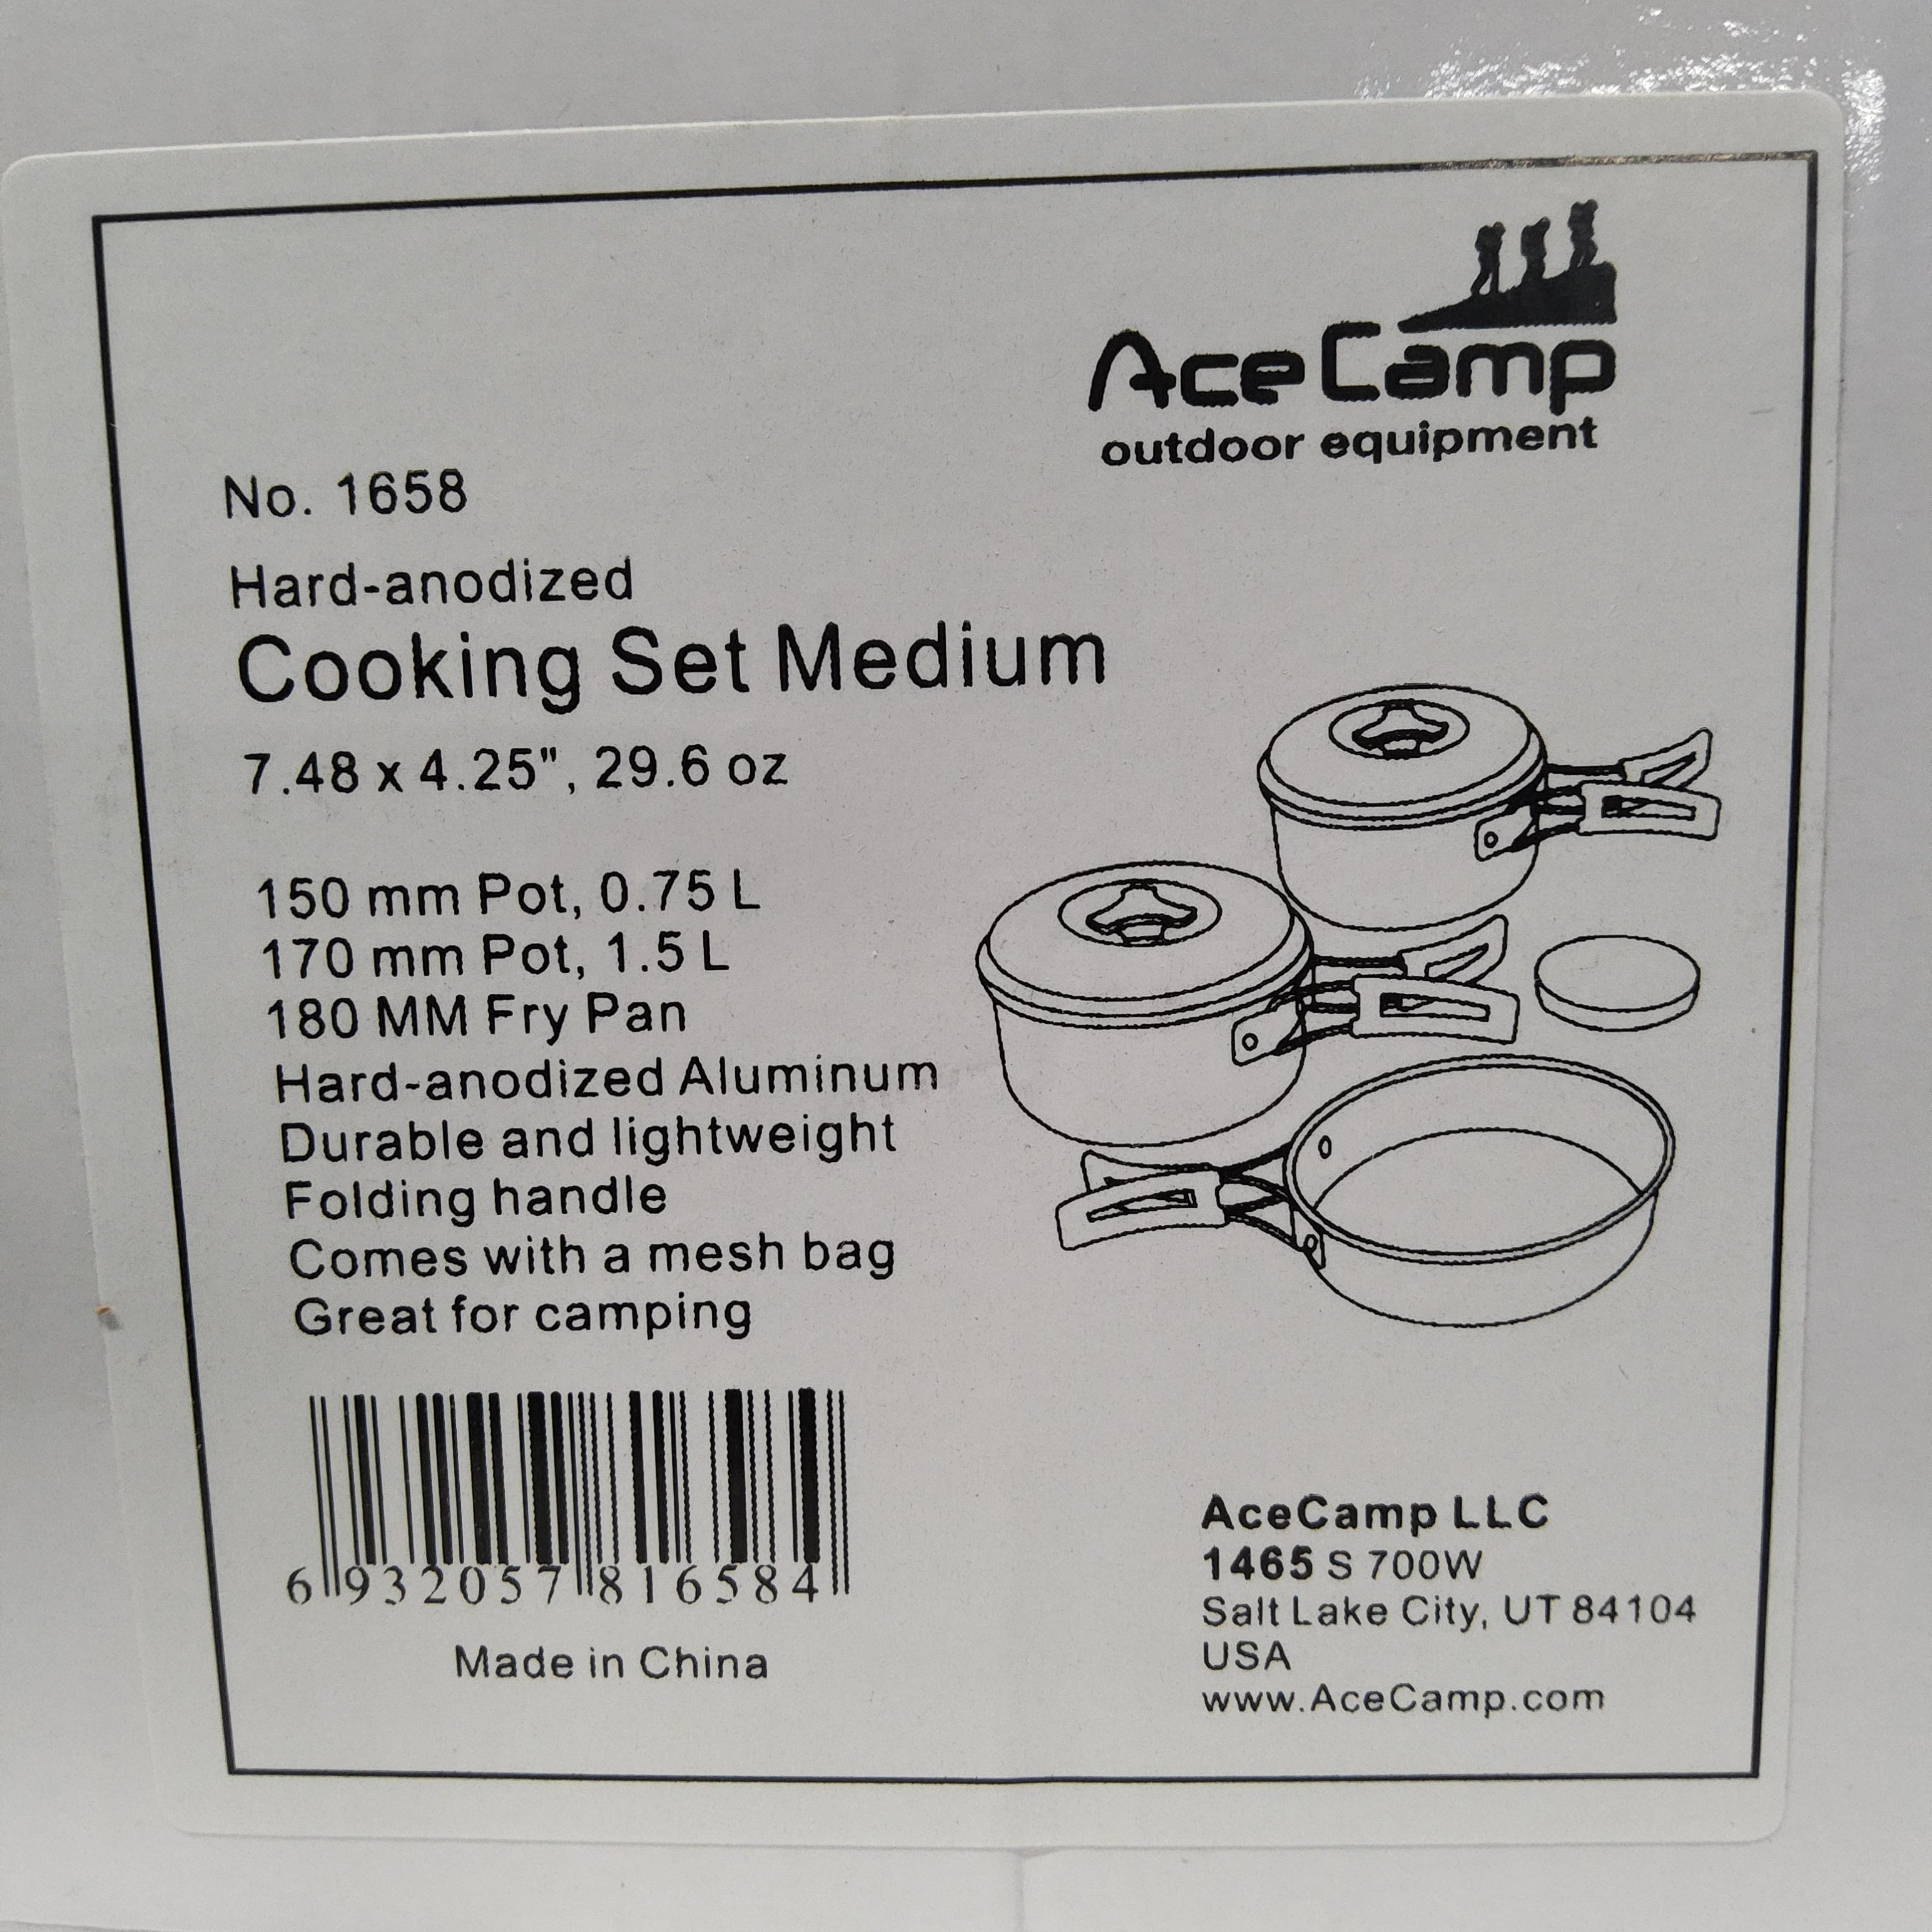 Ace Camp Cooking Set - Hard-anodized Aluminum - Medium #1658